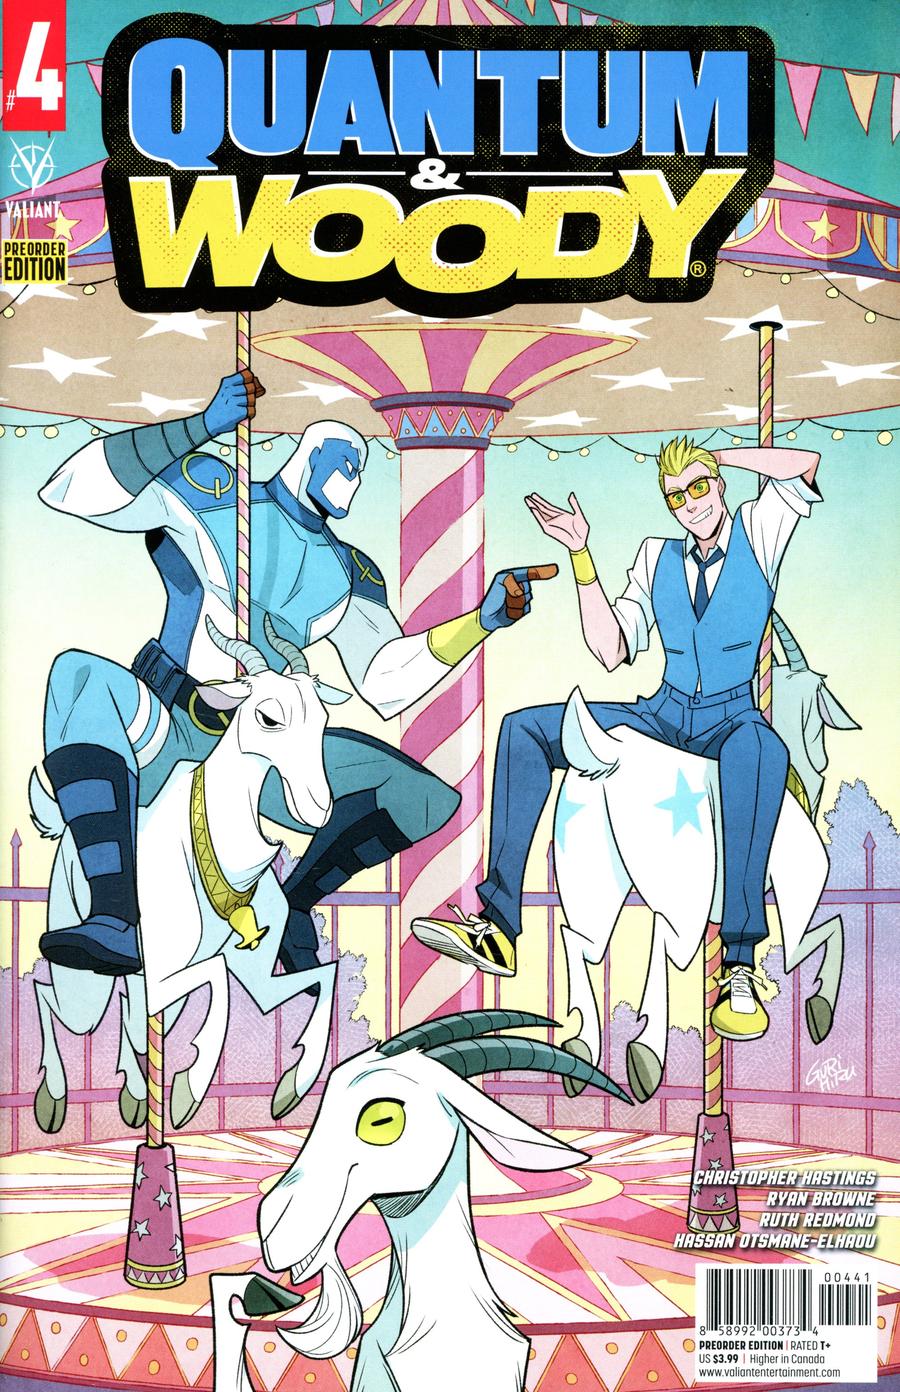 Quantum & Woody Vol 5 #4 Cover C Variant Pre-Order Edition